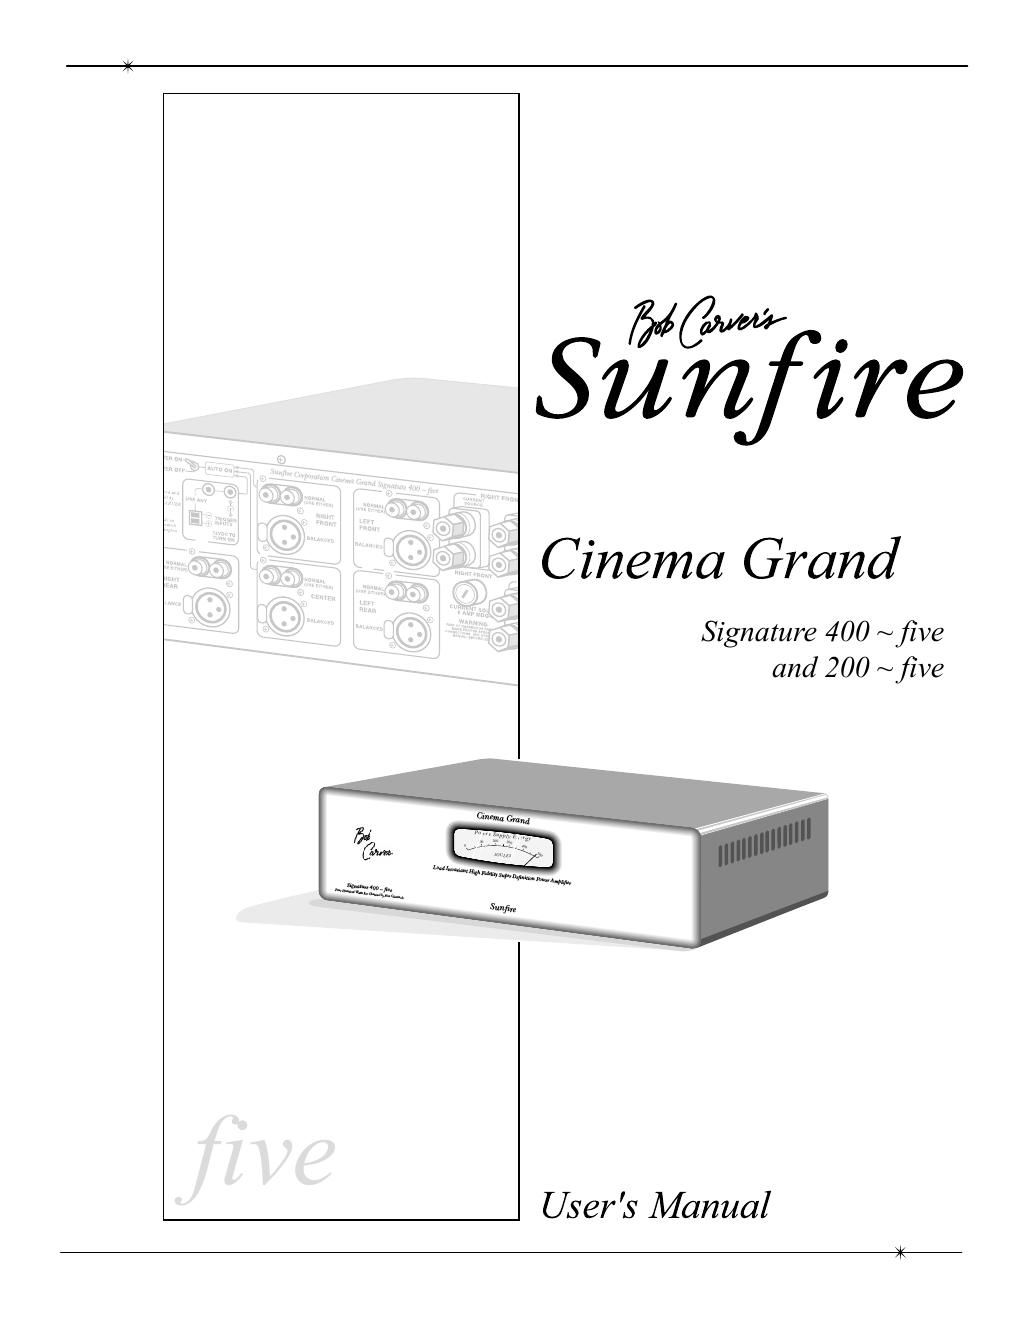 sunfire cinema grand signature 200 400 5 owners manual